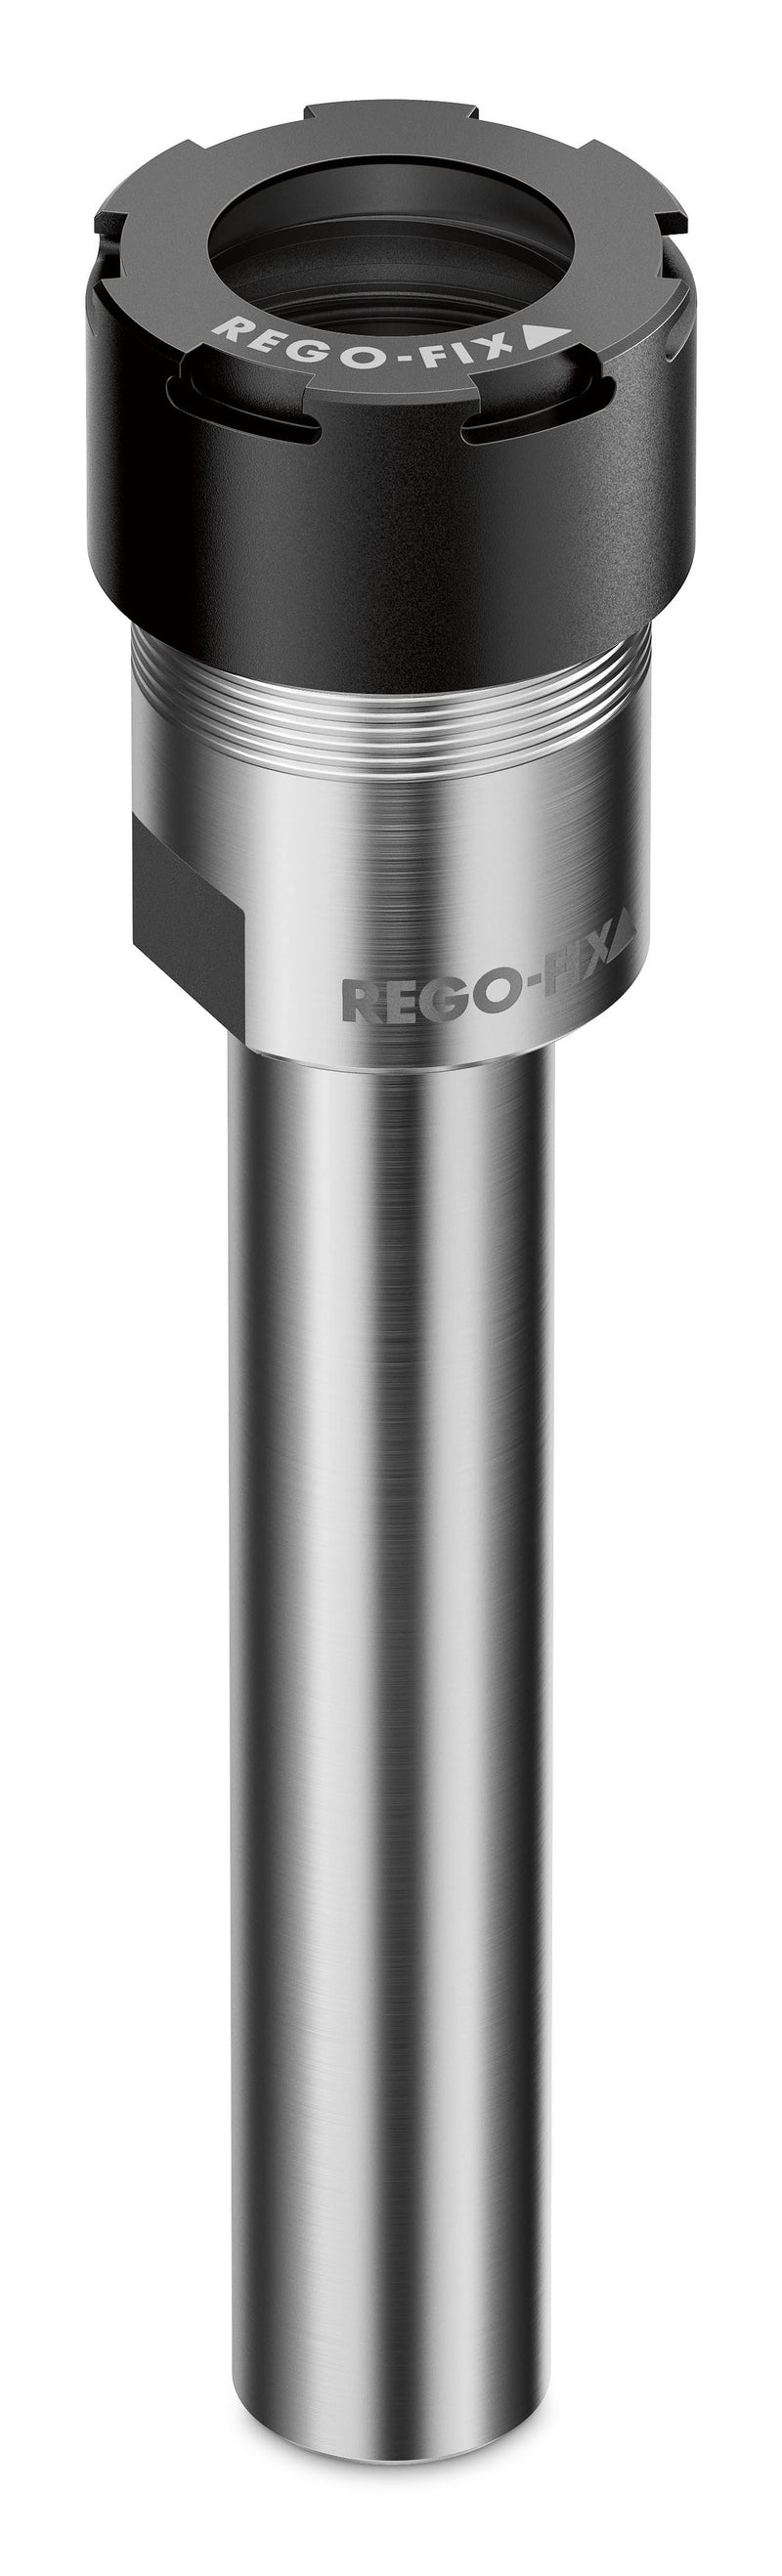 Rego-Fix CYL 25 x 155/ERMX 20 Tool Holder 4625.22090 (0647911)